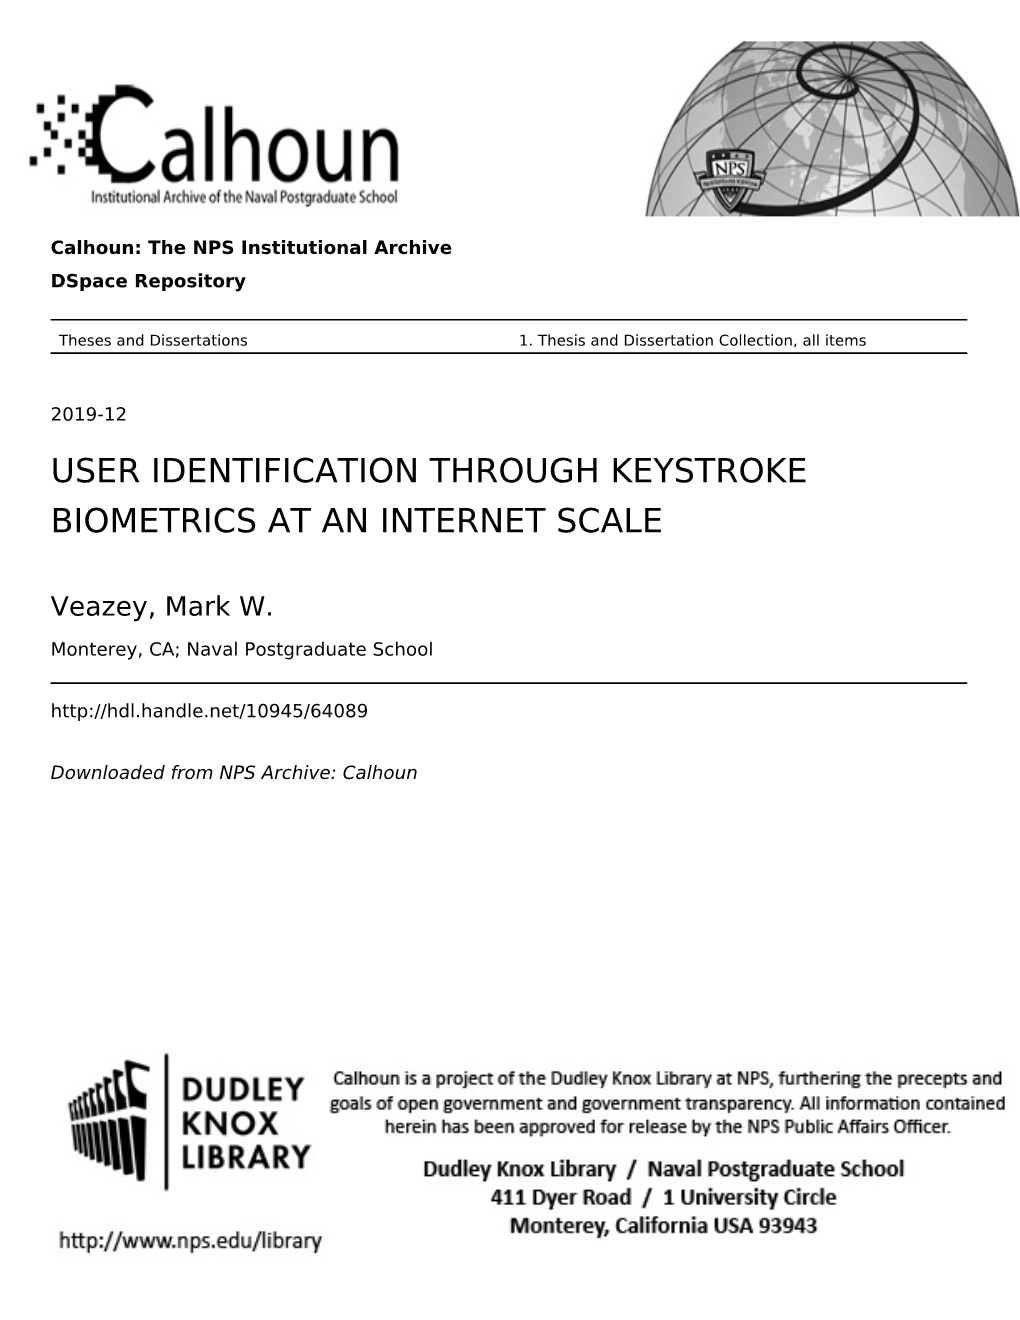 User Identification Through Keystroke Biometrics at an Internet Scale